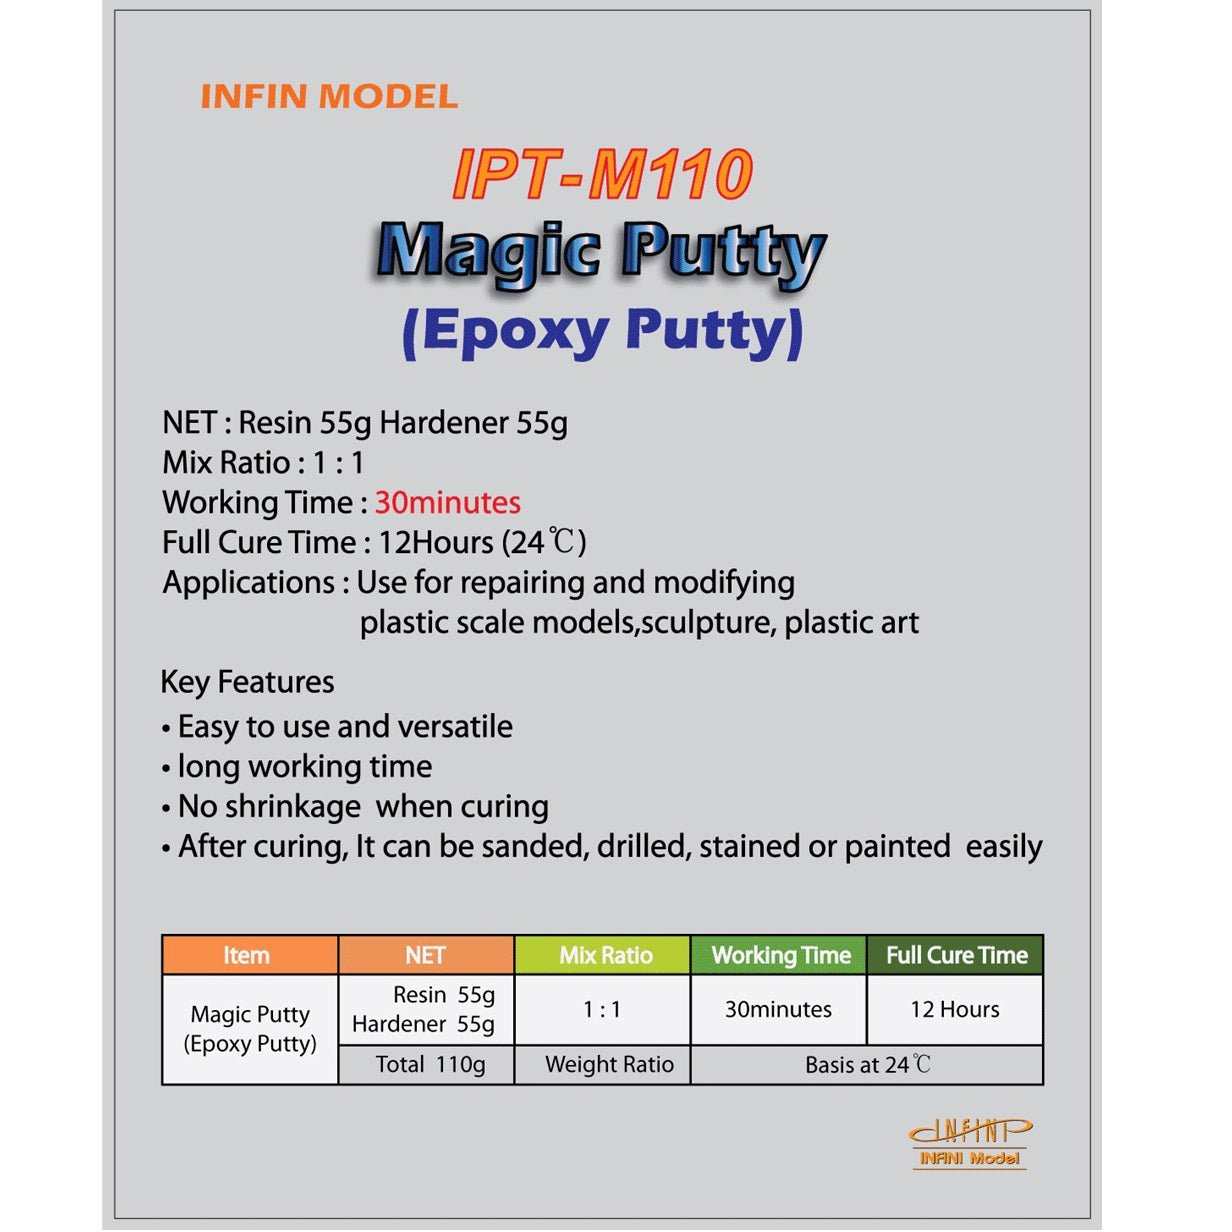 INFINI Model Magic Epoxy Putty